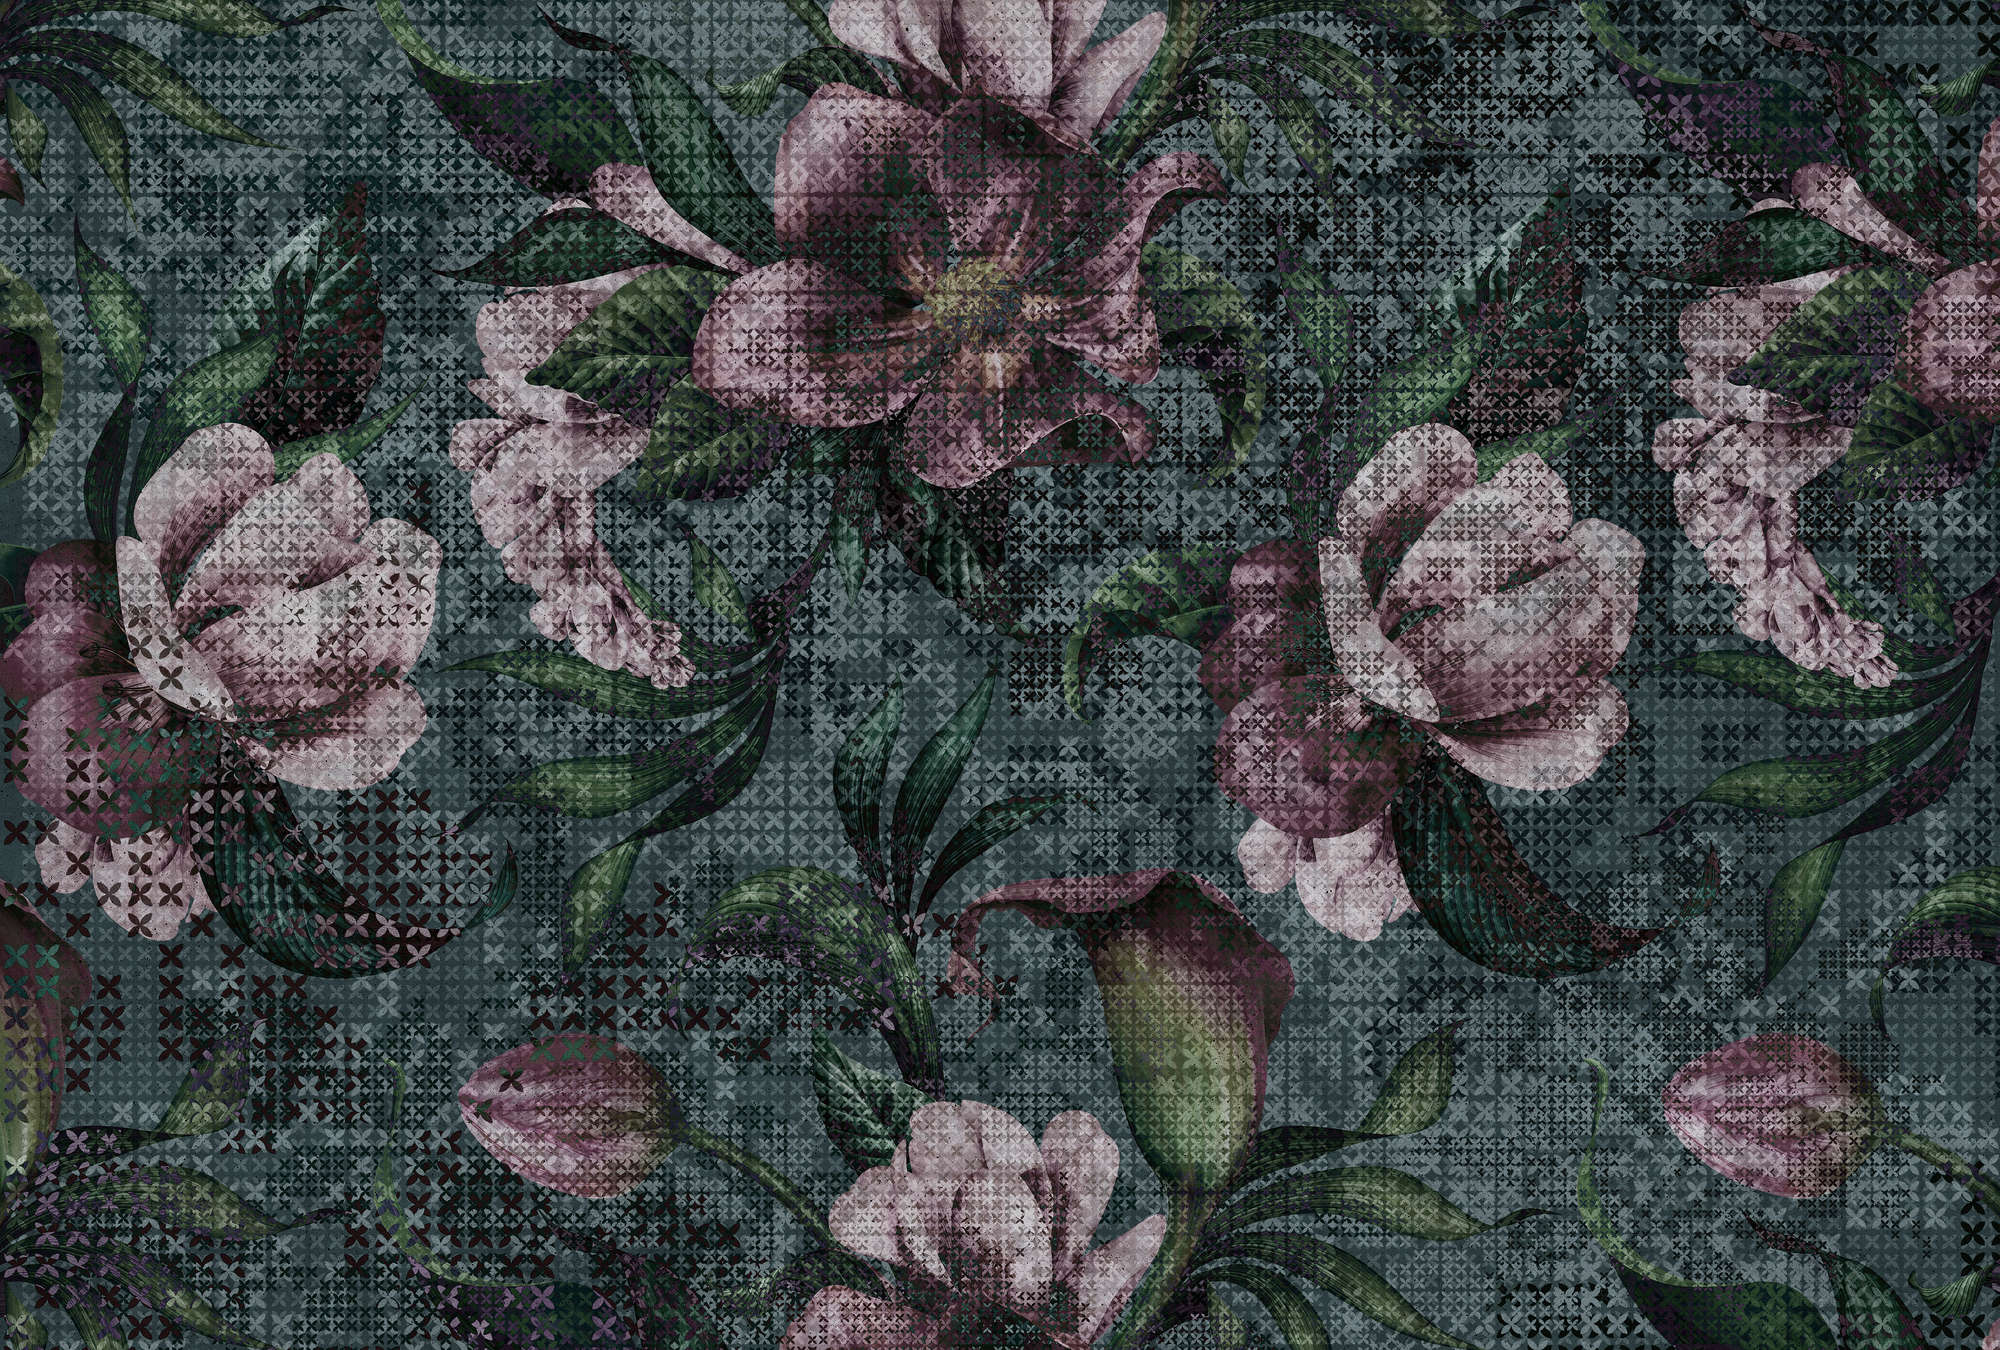             Blumen Fototapete Pixel Design – Grün, Rosa
        